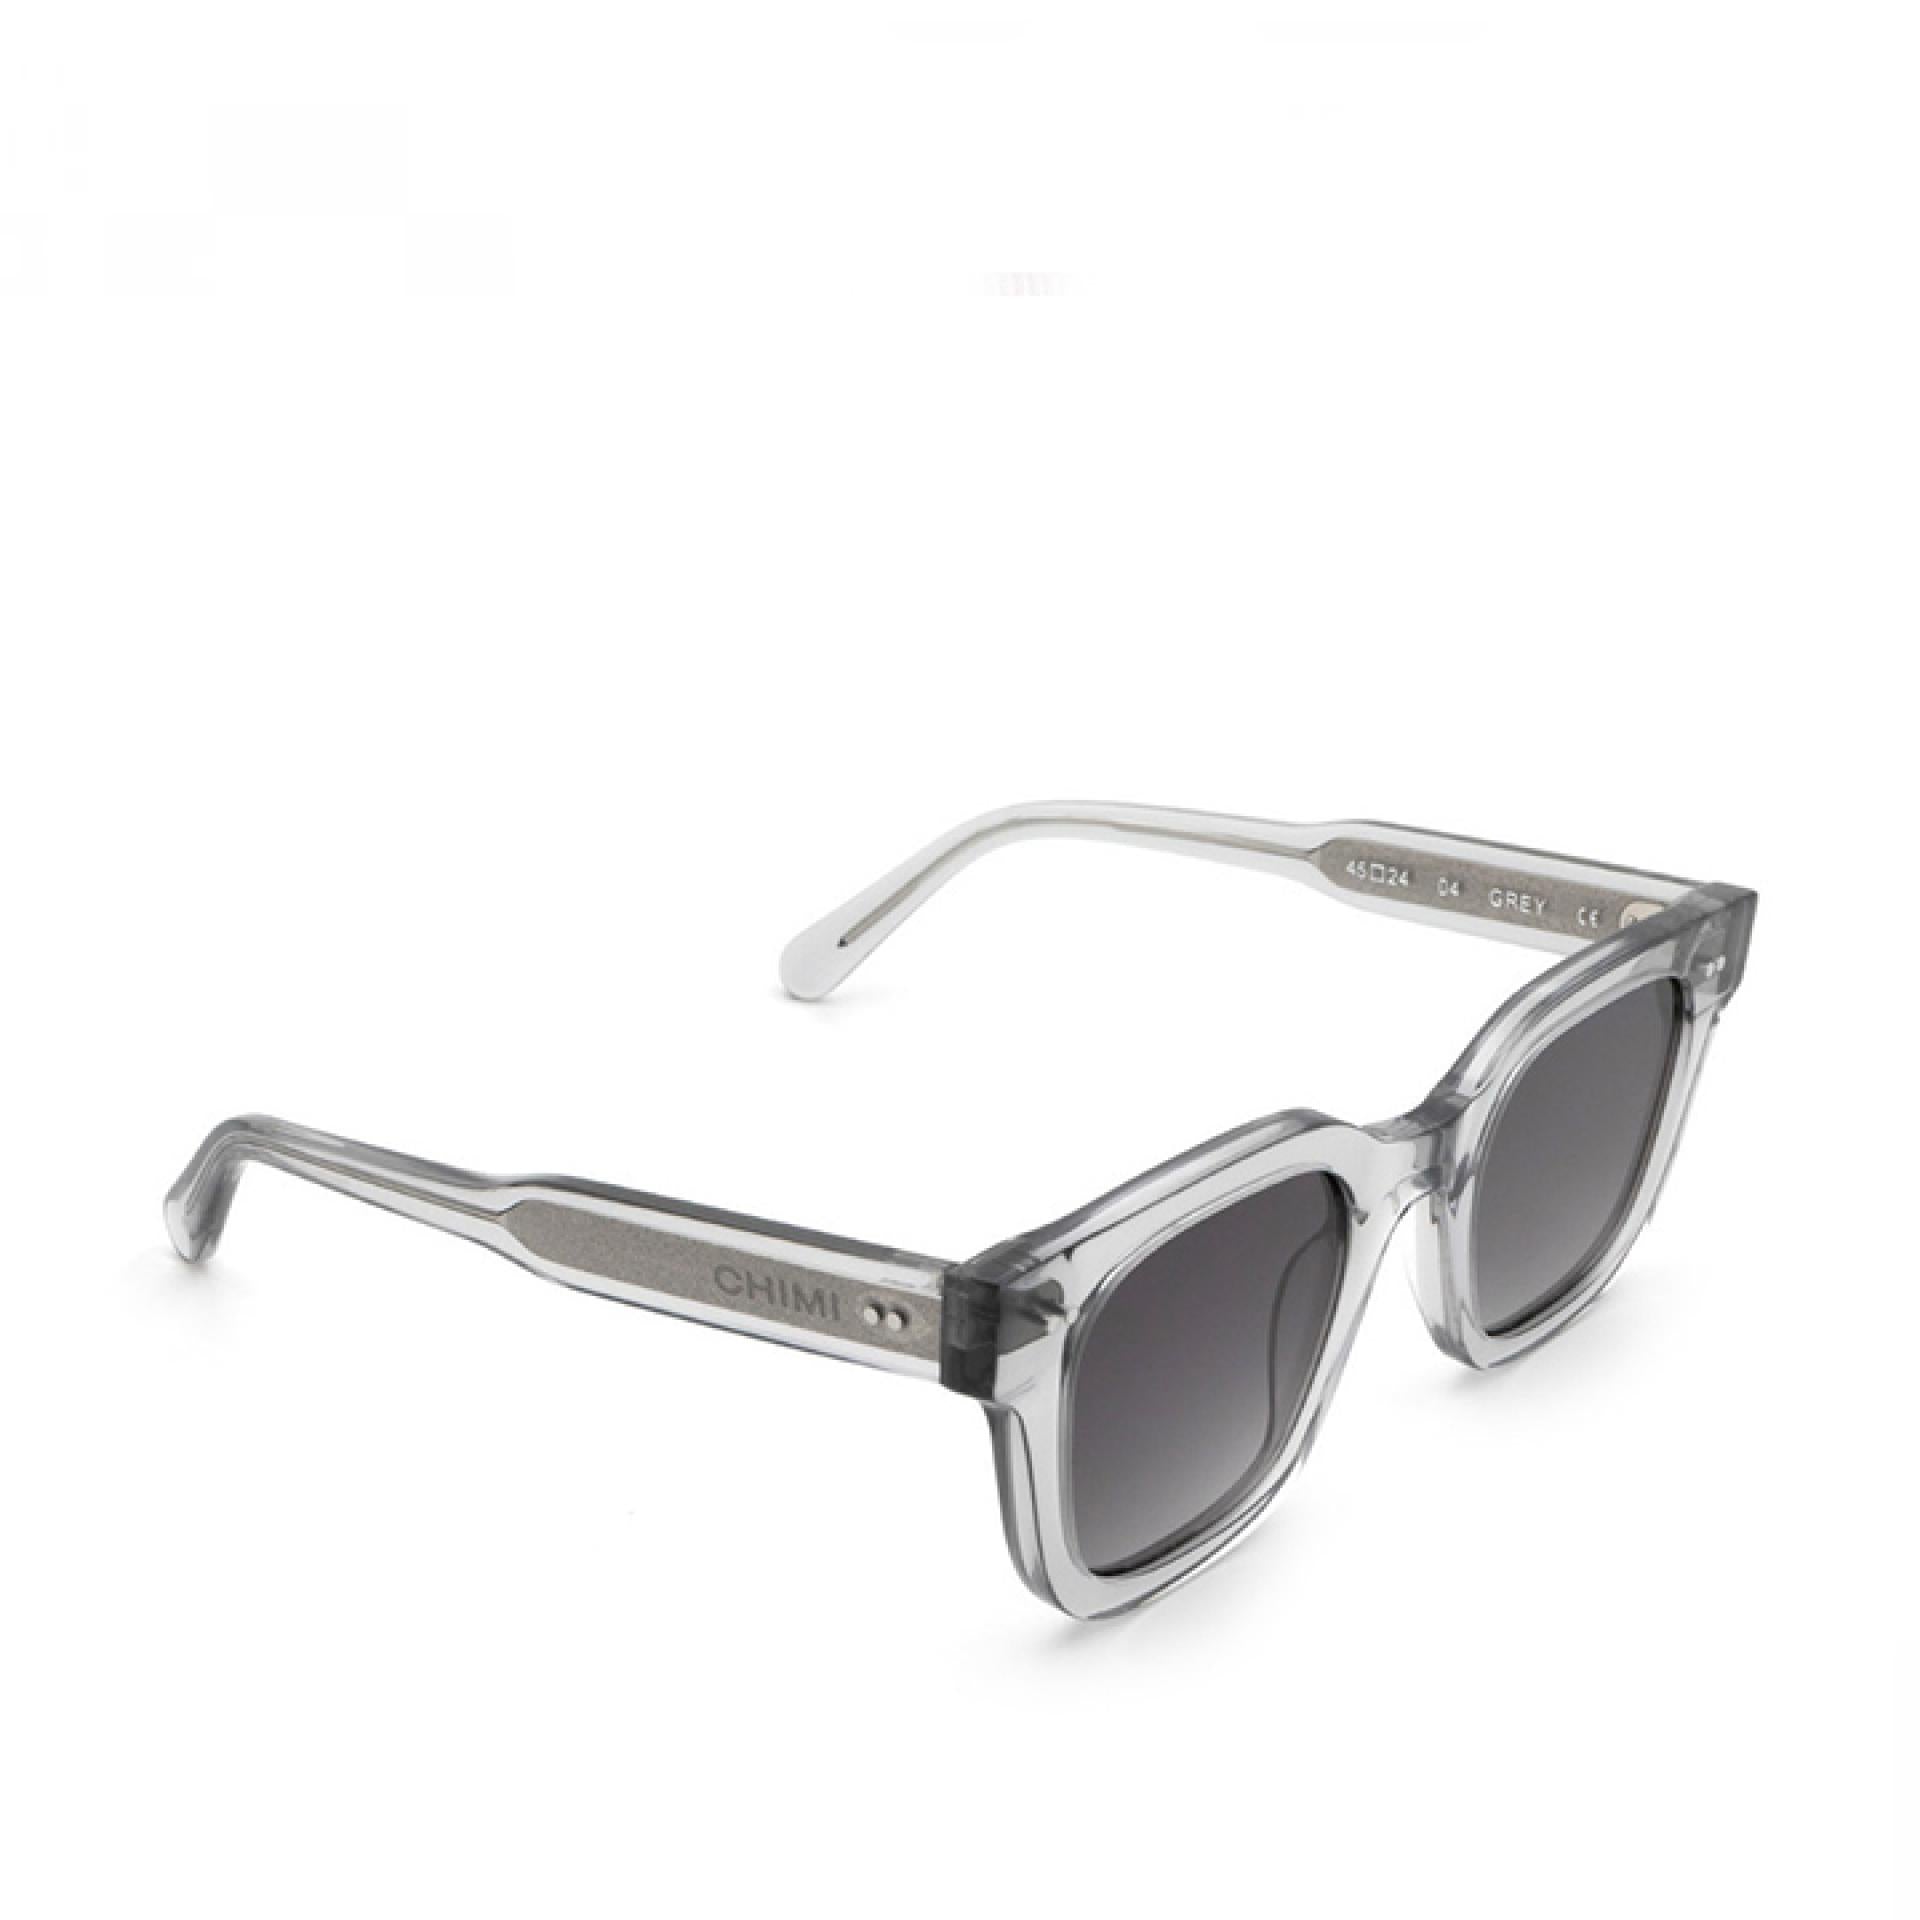 Chimi Sonnenbrille Modell 04M Grey